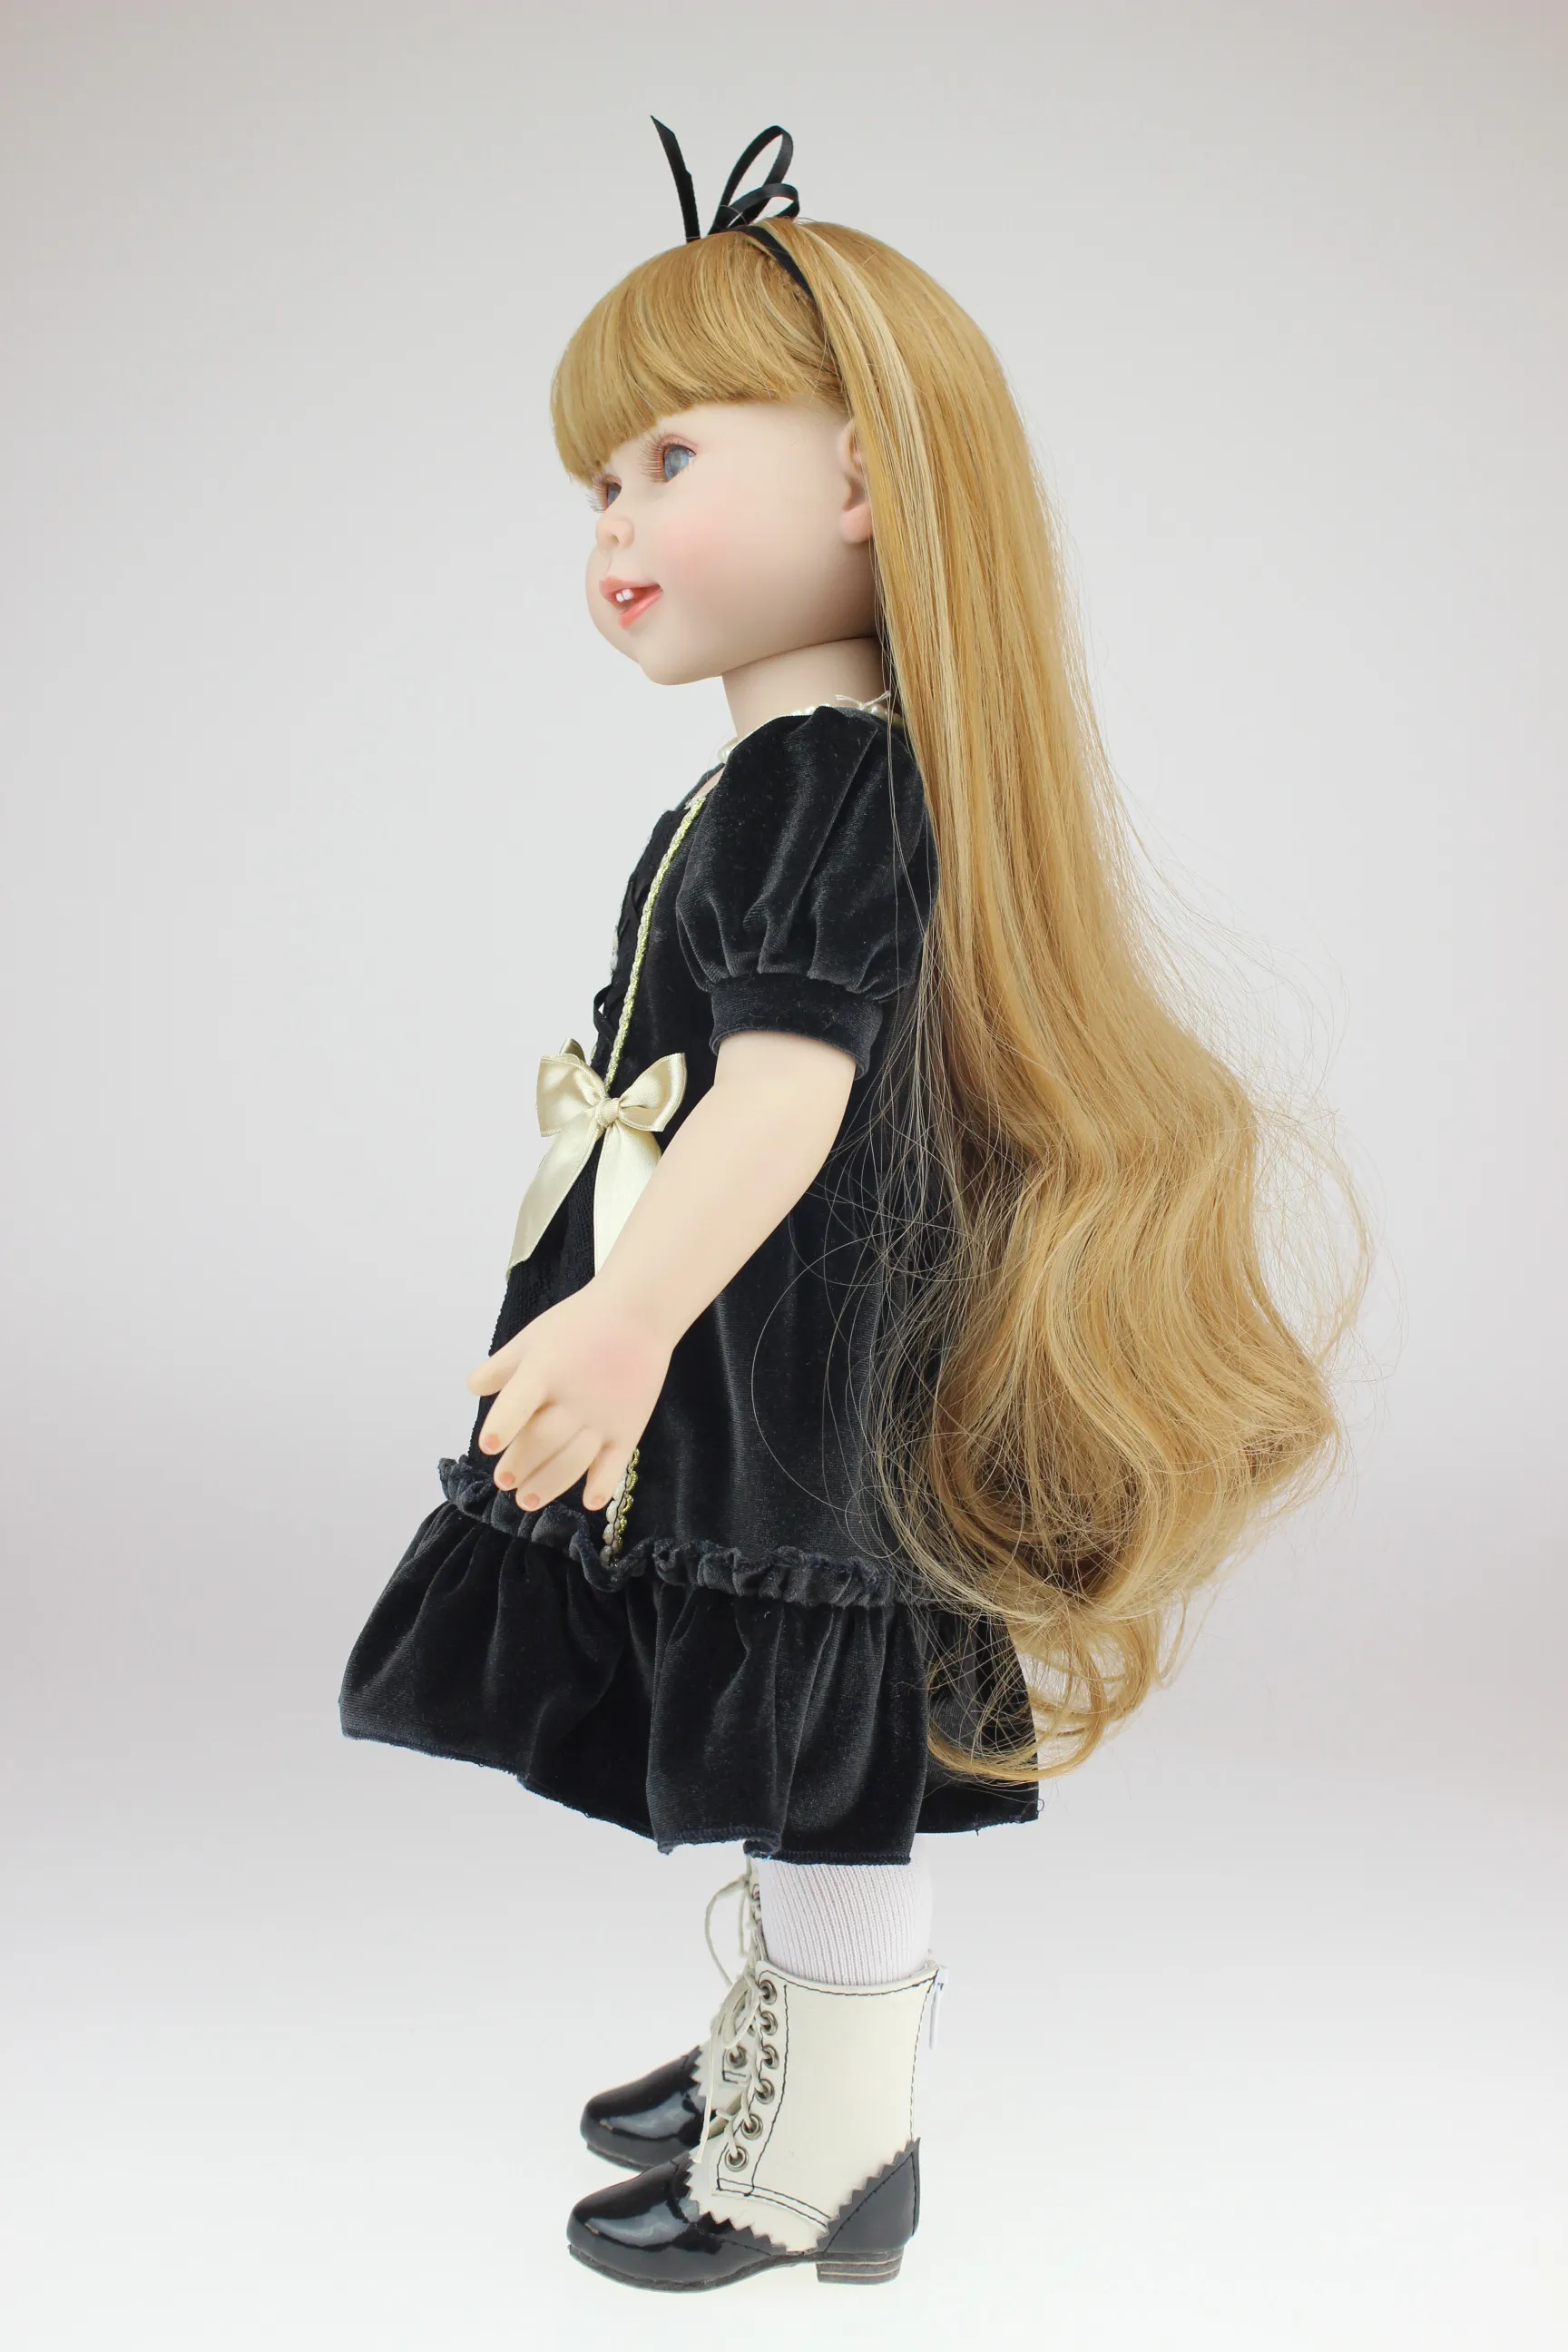 18 inch full body vinyl Amerikaanse meisjes realistische herboren poppen dragen donkere jurk peuters verjaardag kerstcadeau